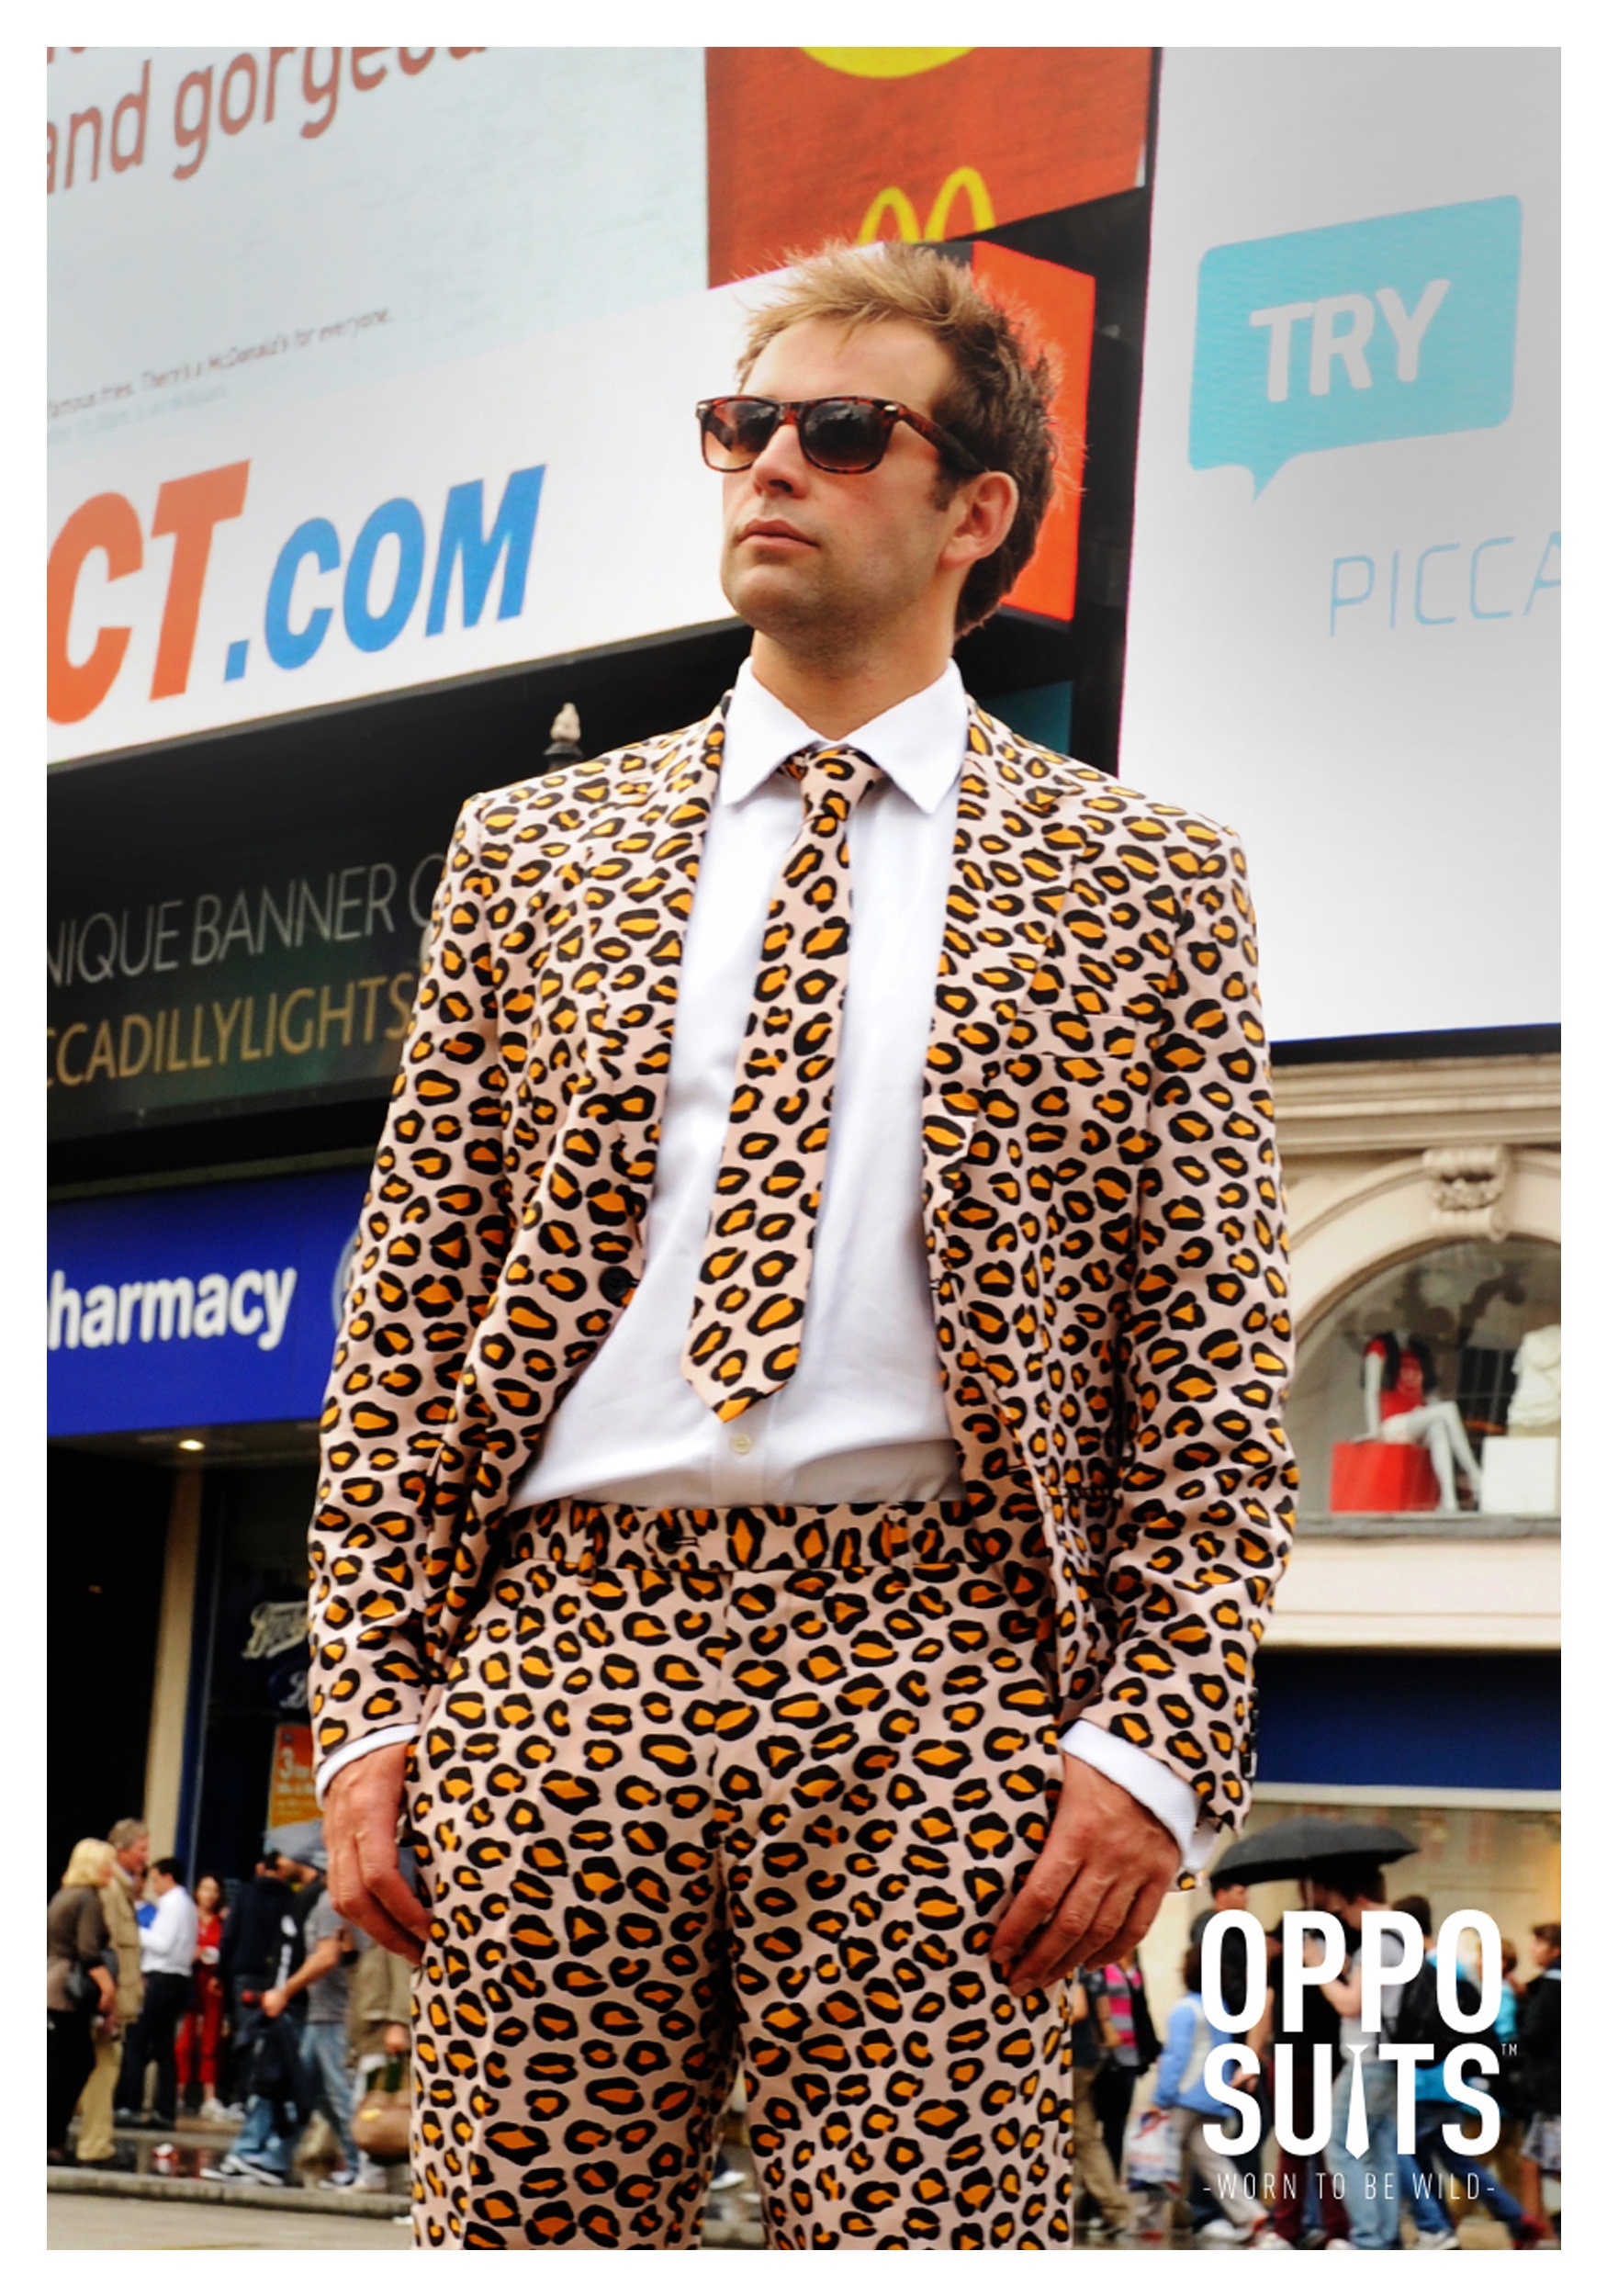 Men's Jaguar Print Suit OppoSuits Costume